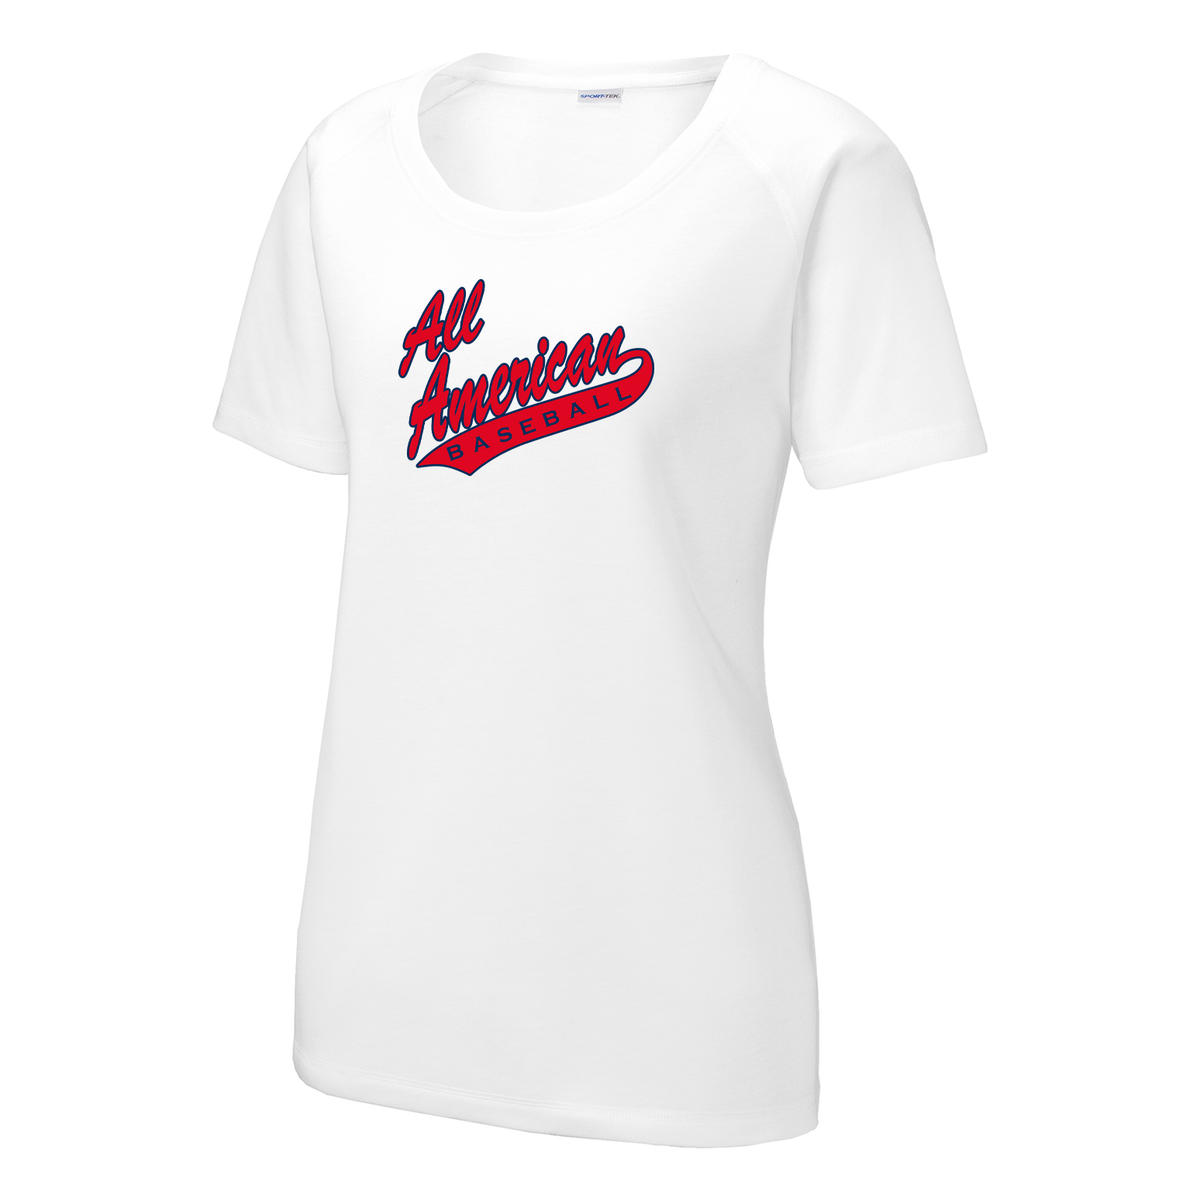 All American Baseball Women's Raglan CottonTouch